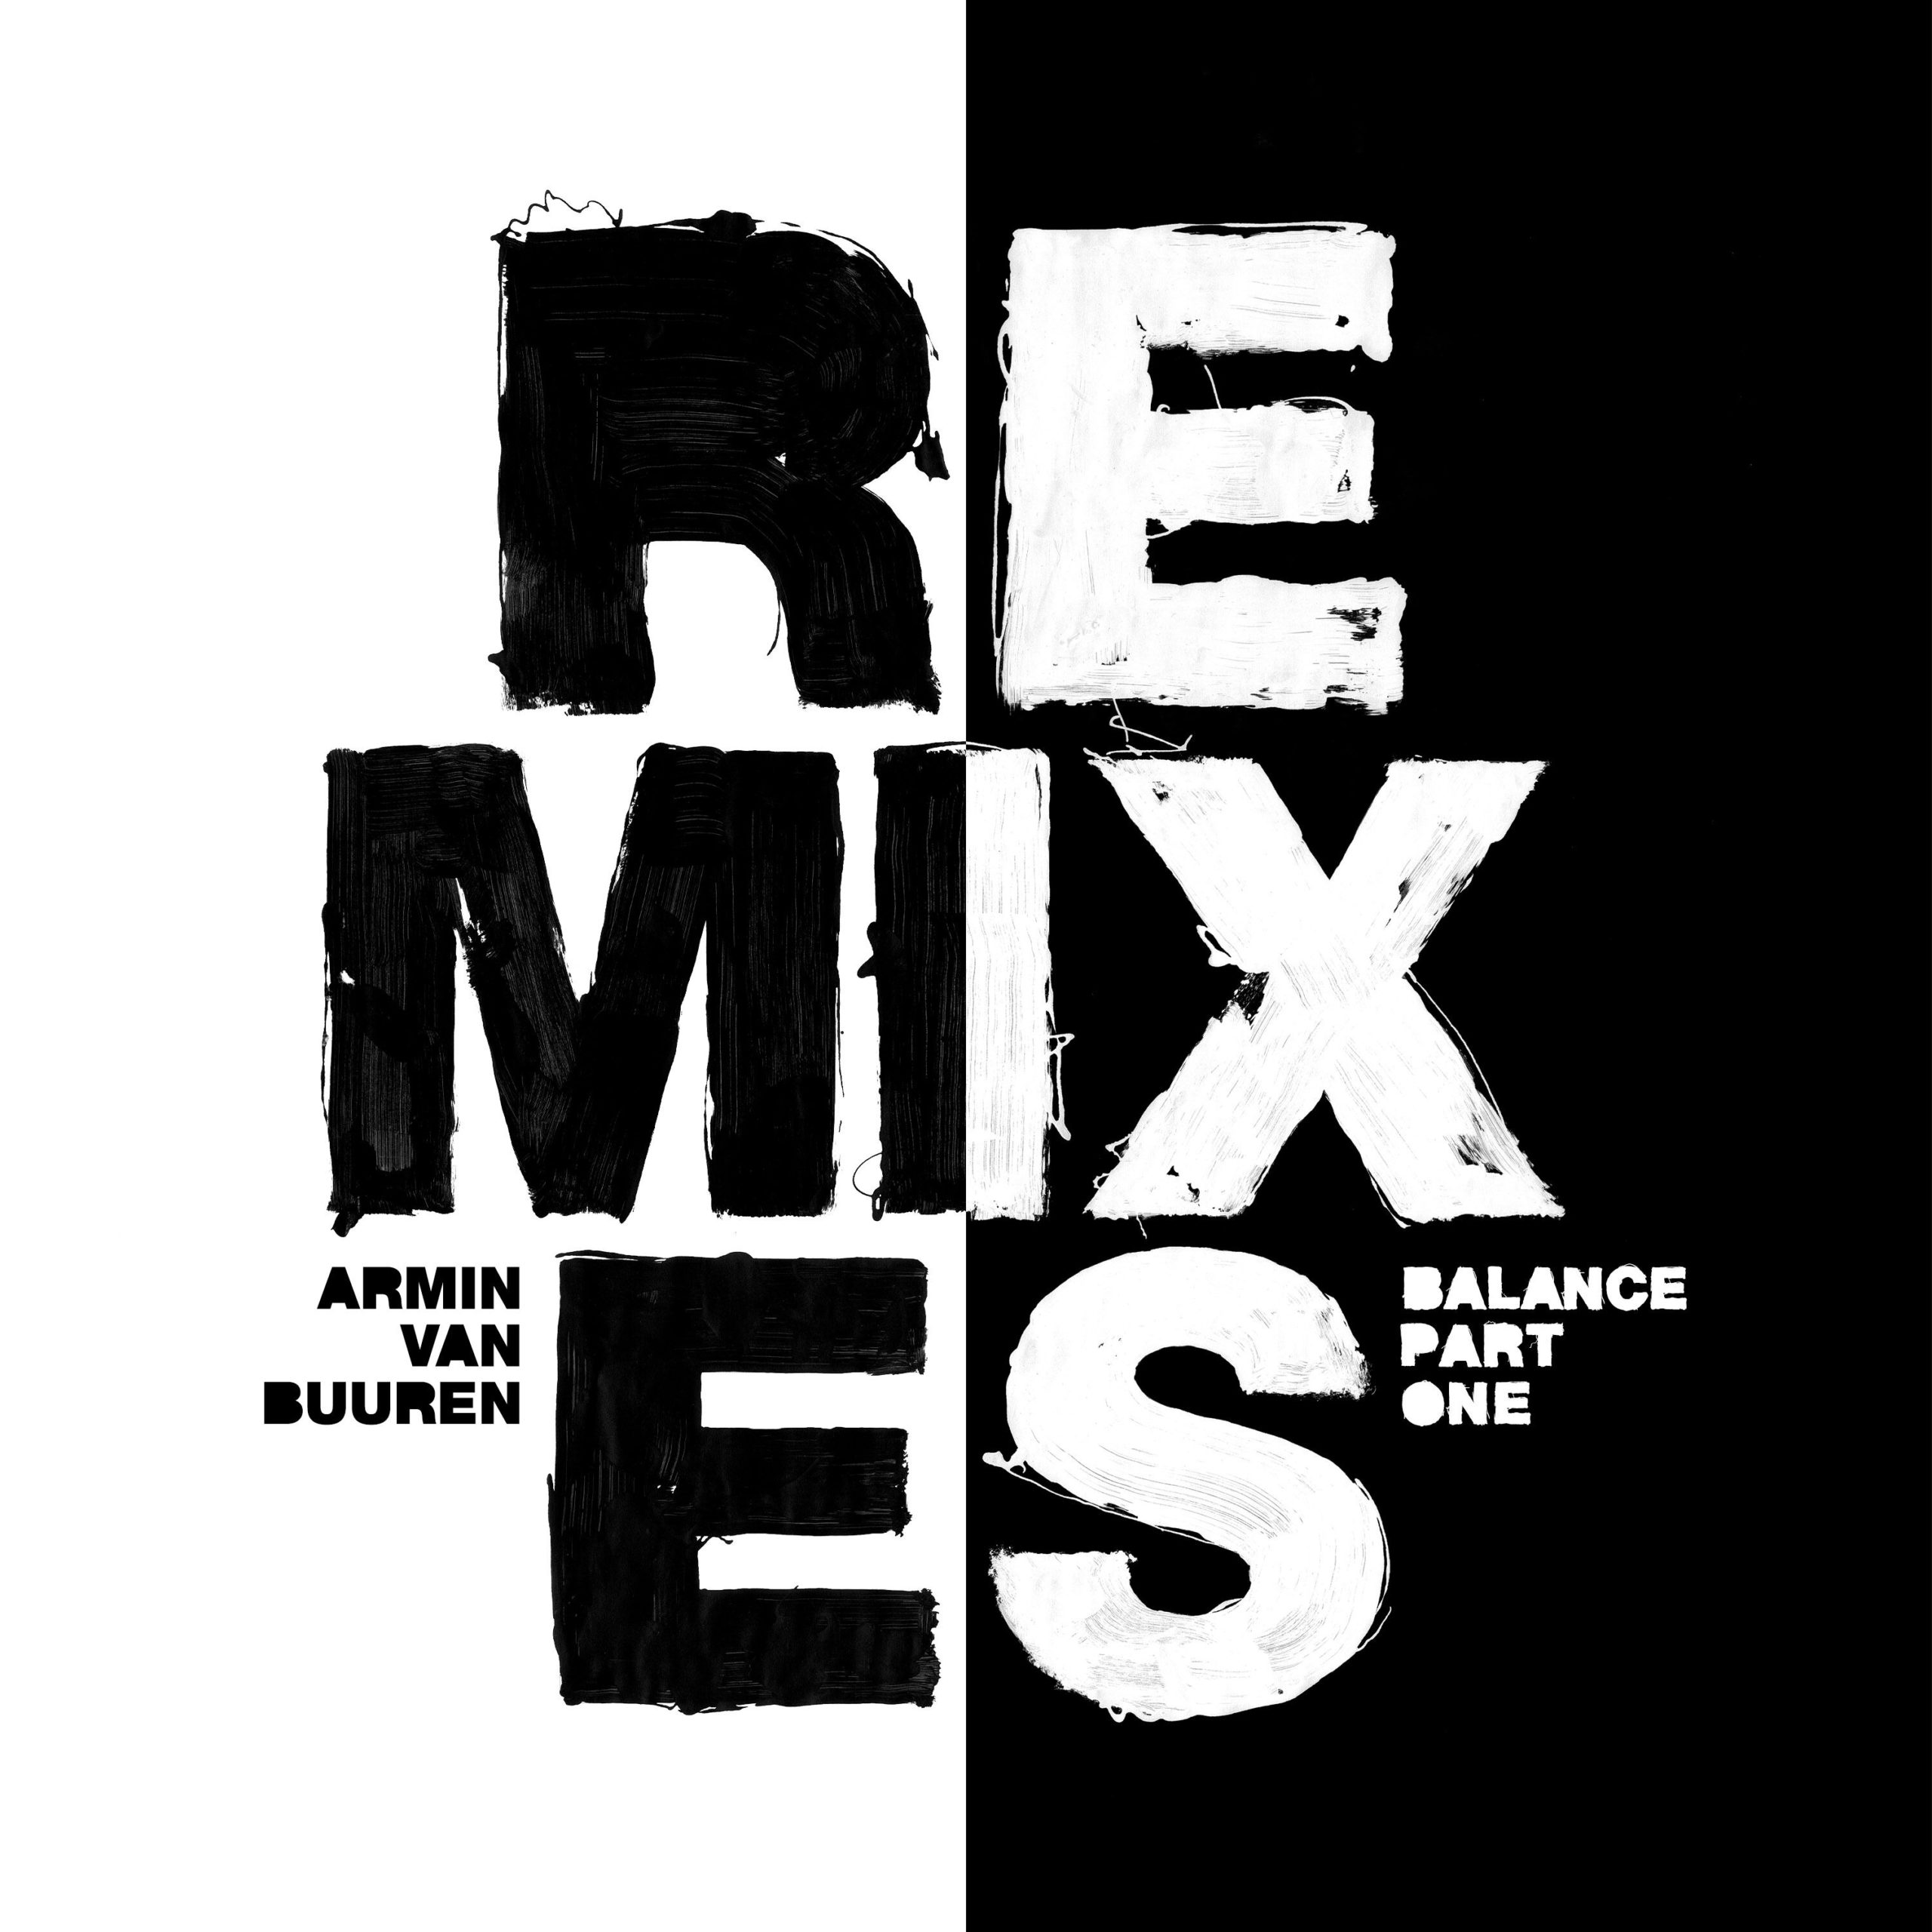 Armin van Buuren presents Balance (Remixes) part 1 on Armada Music